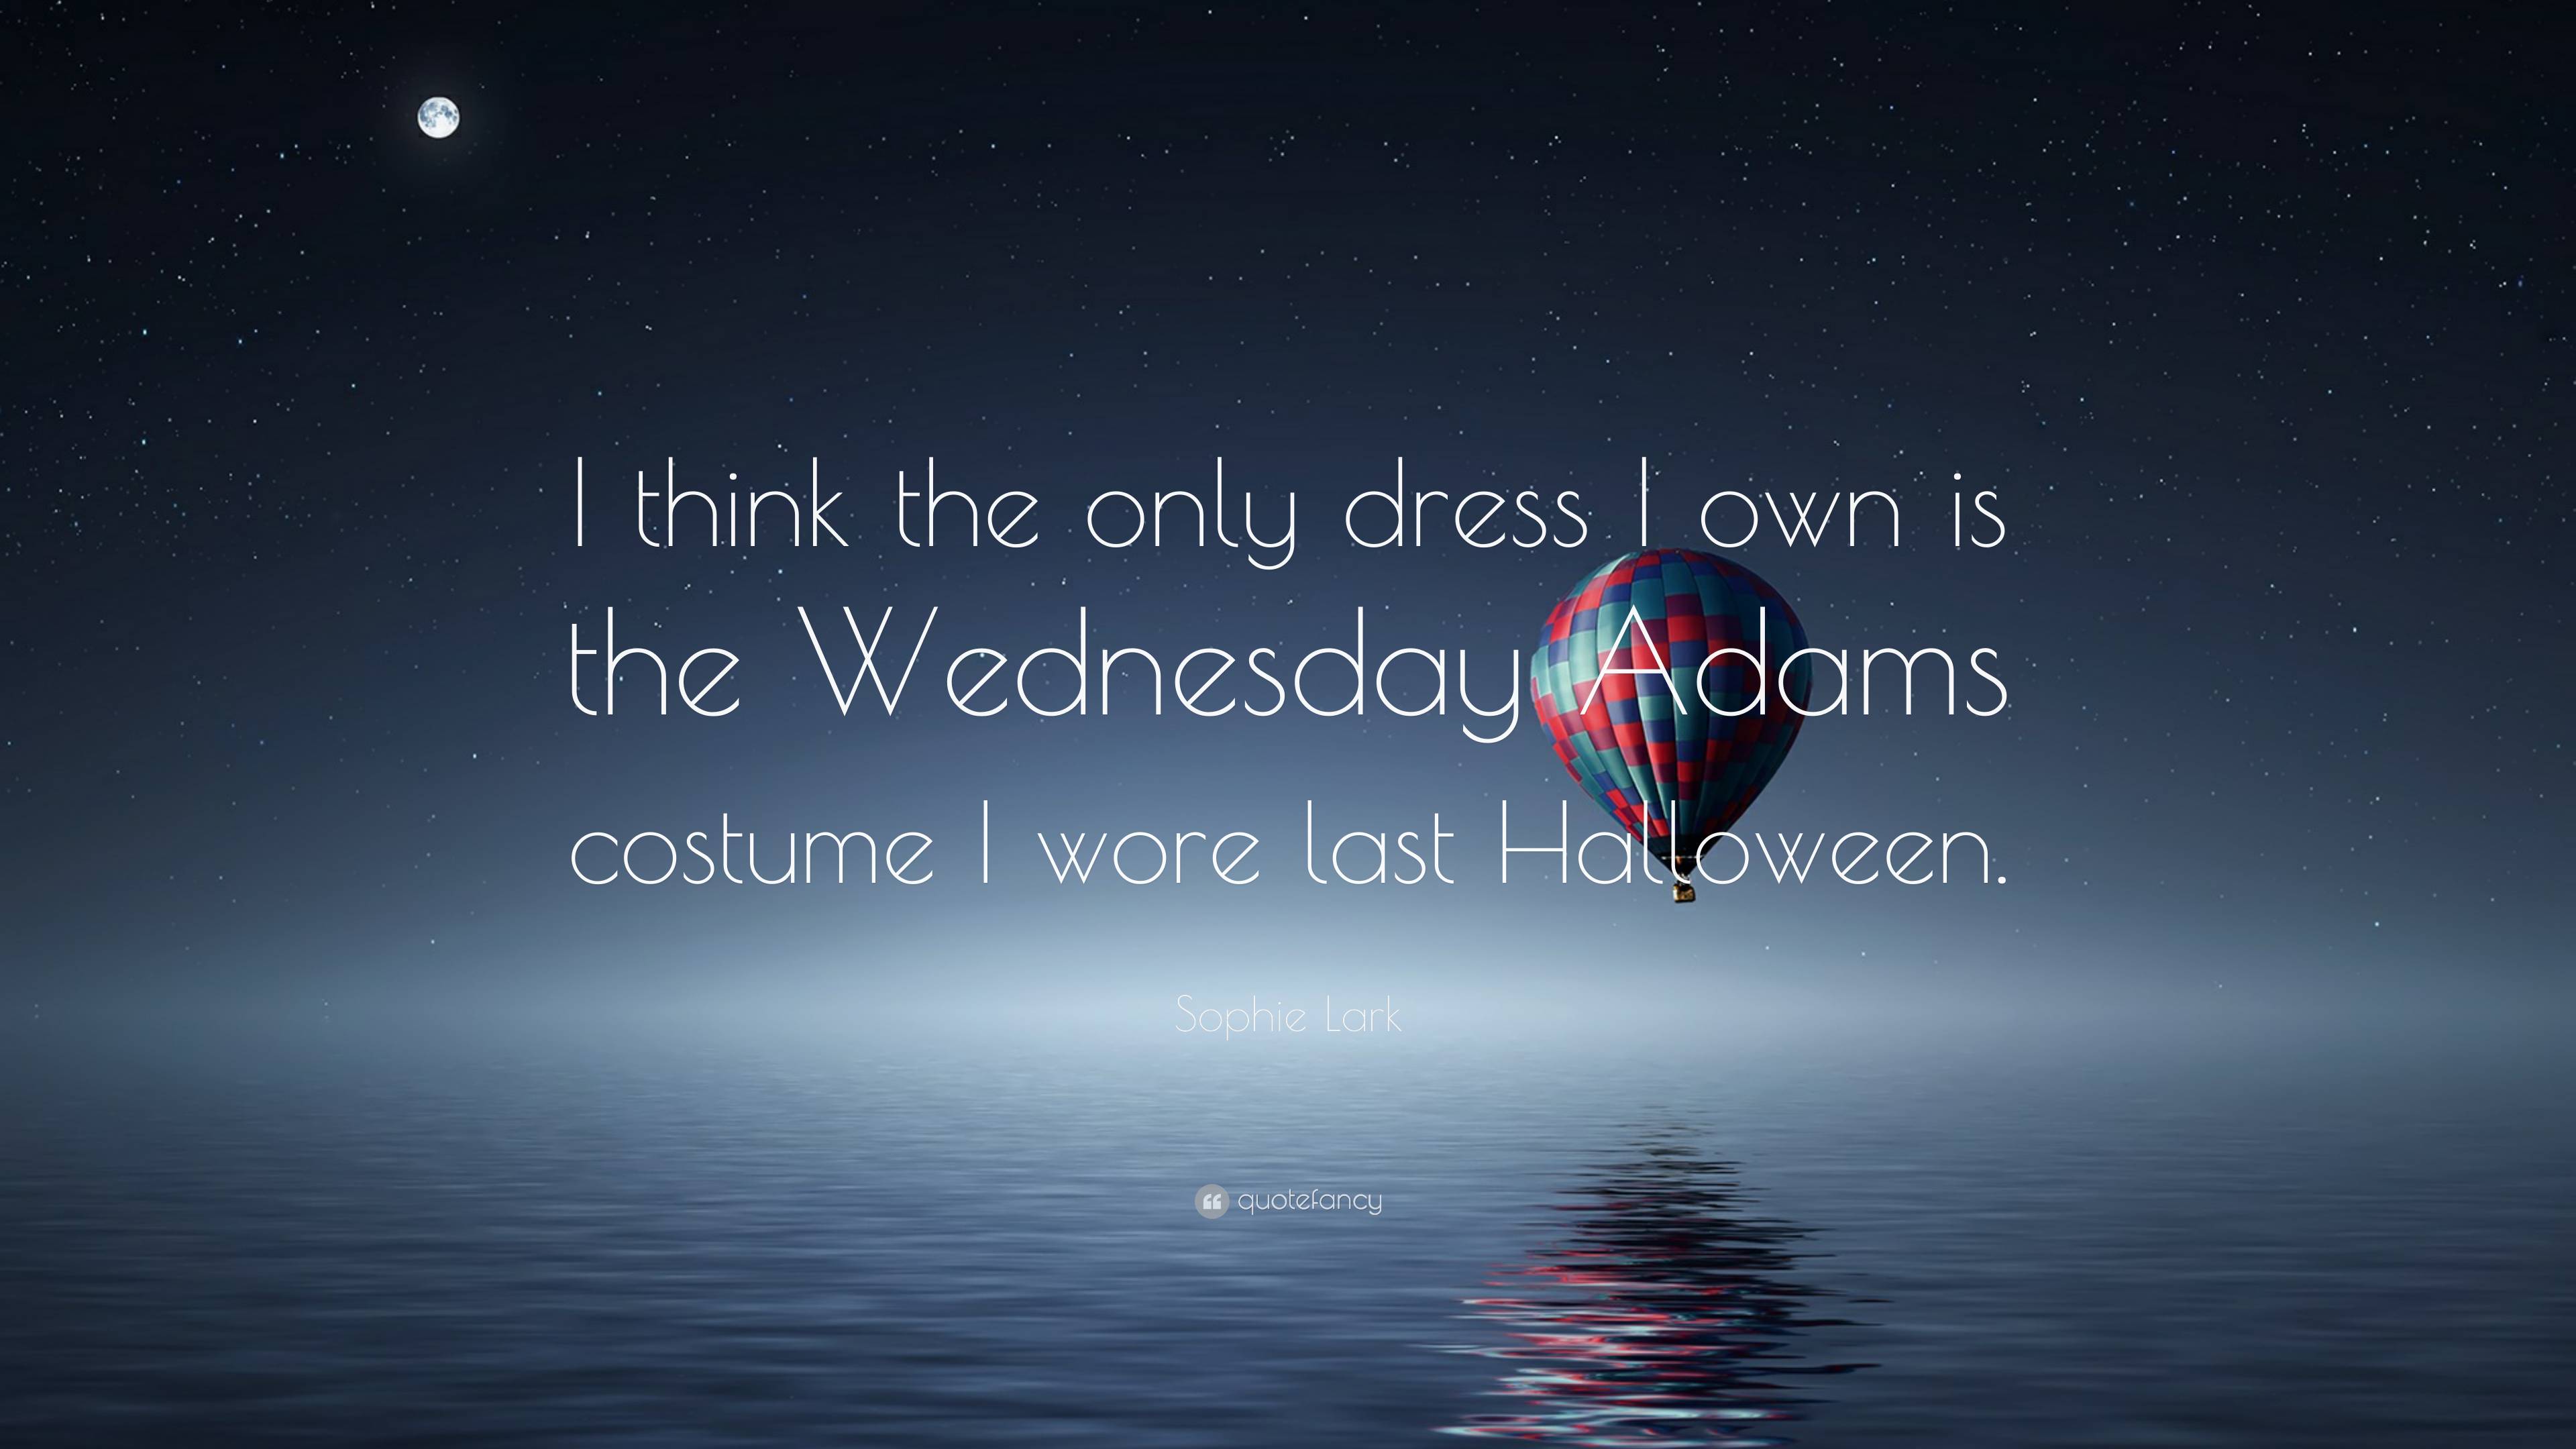 wednesday addams quotes halloween